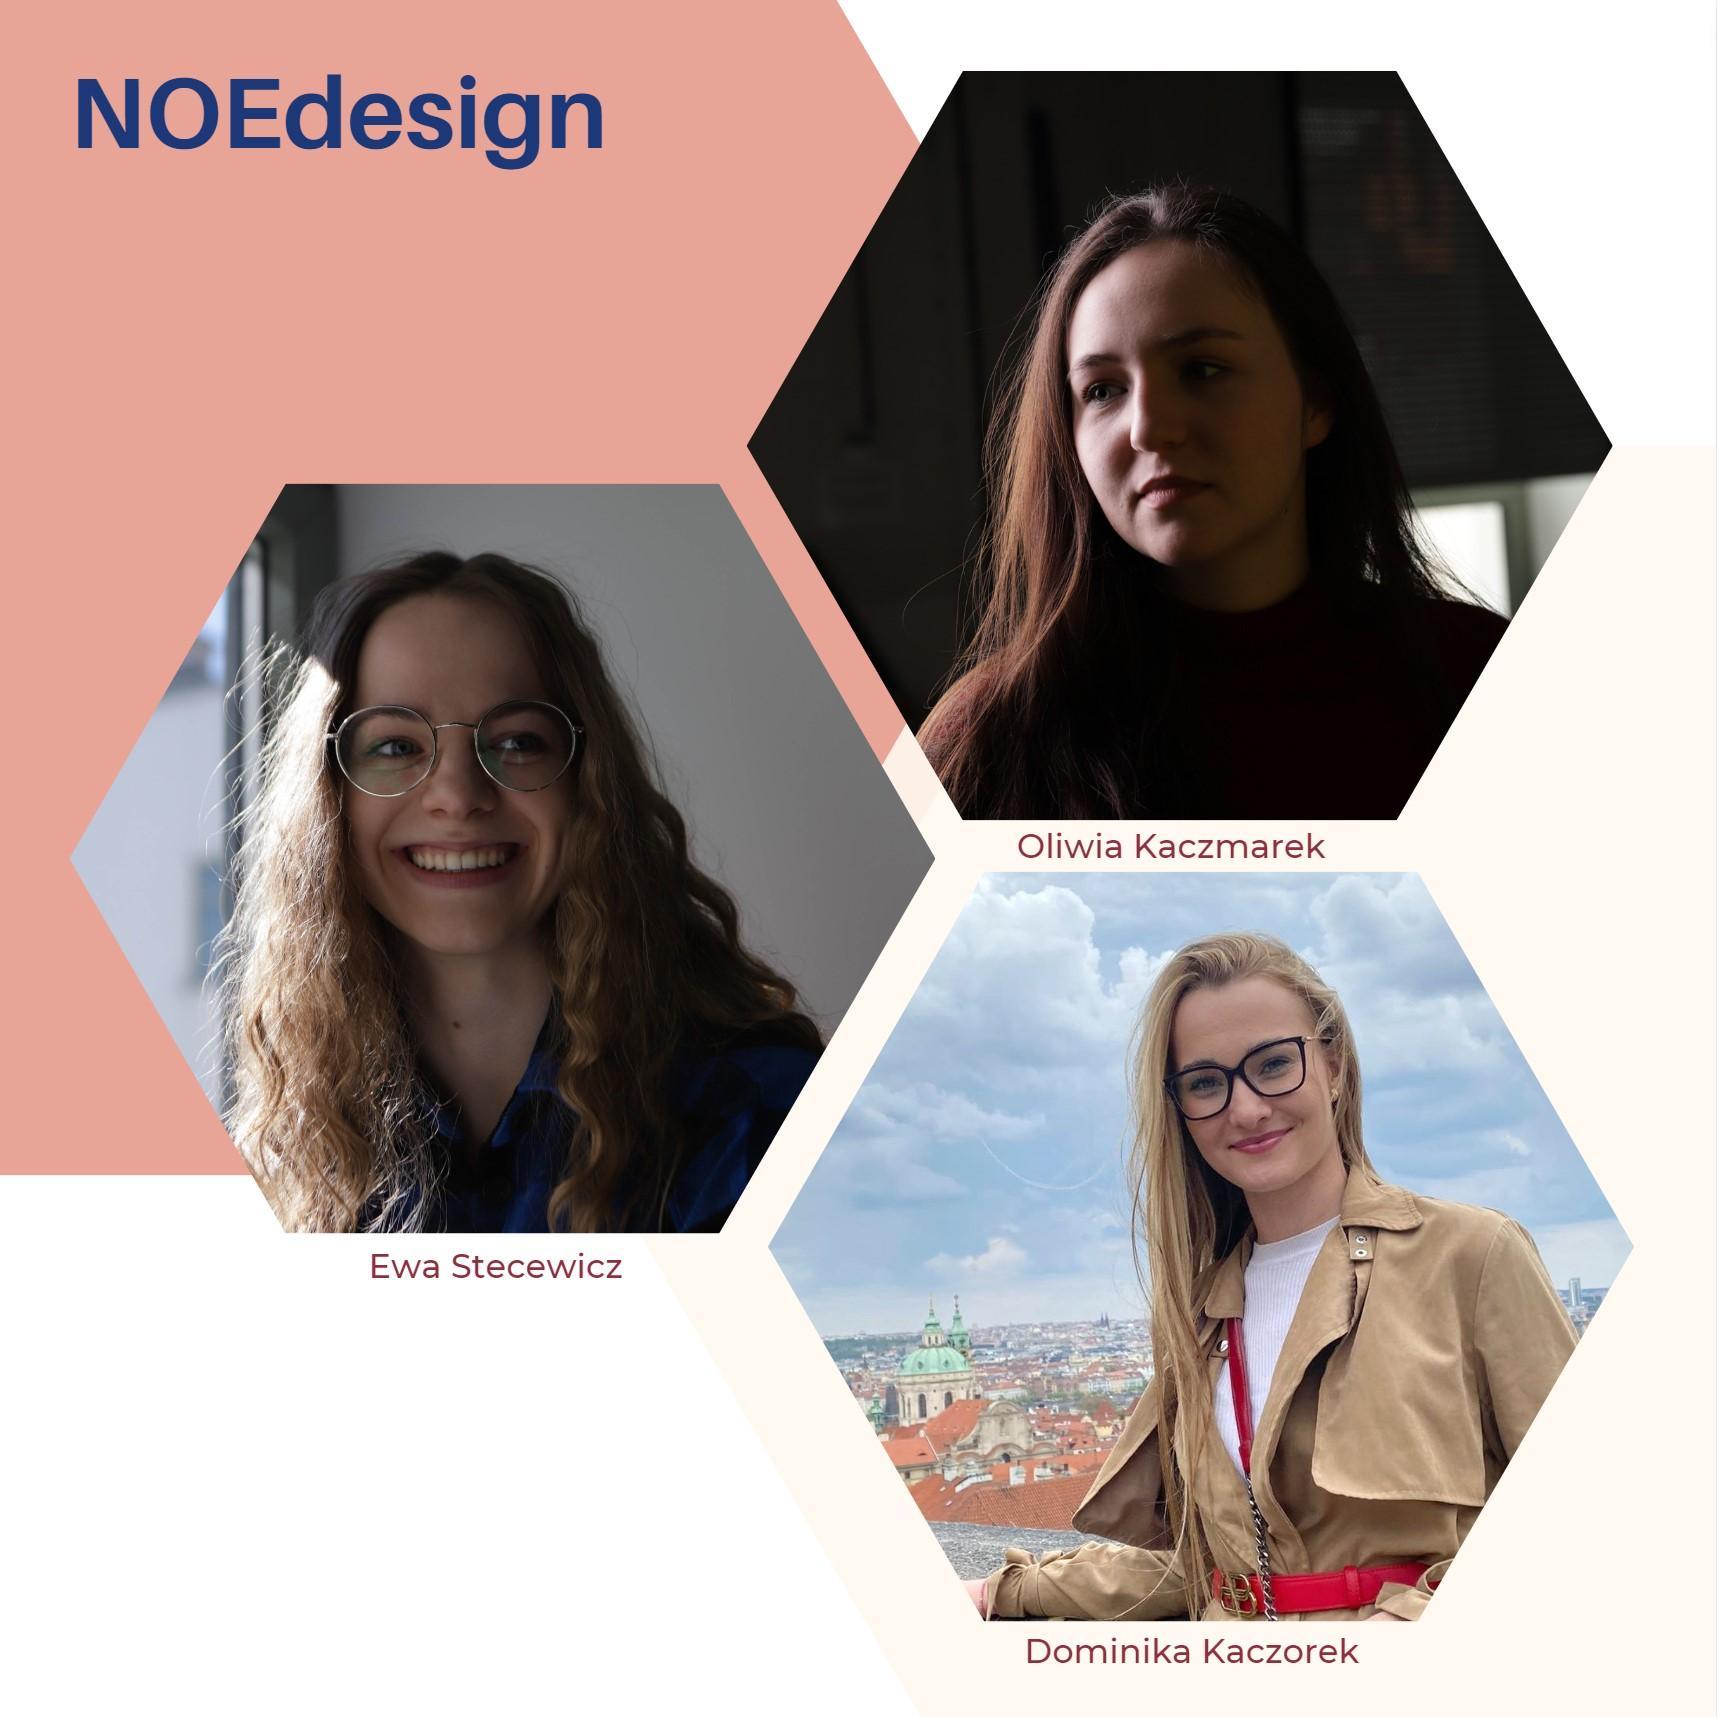 Photos of NOEdesign team members